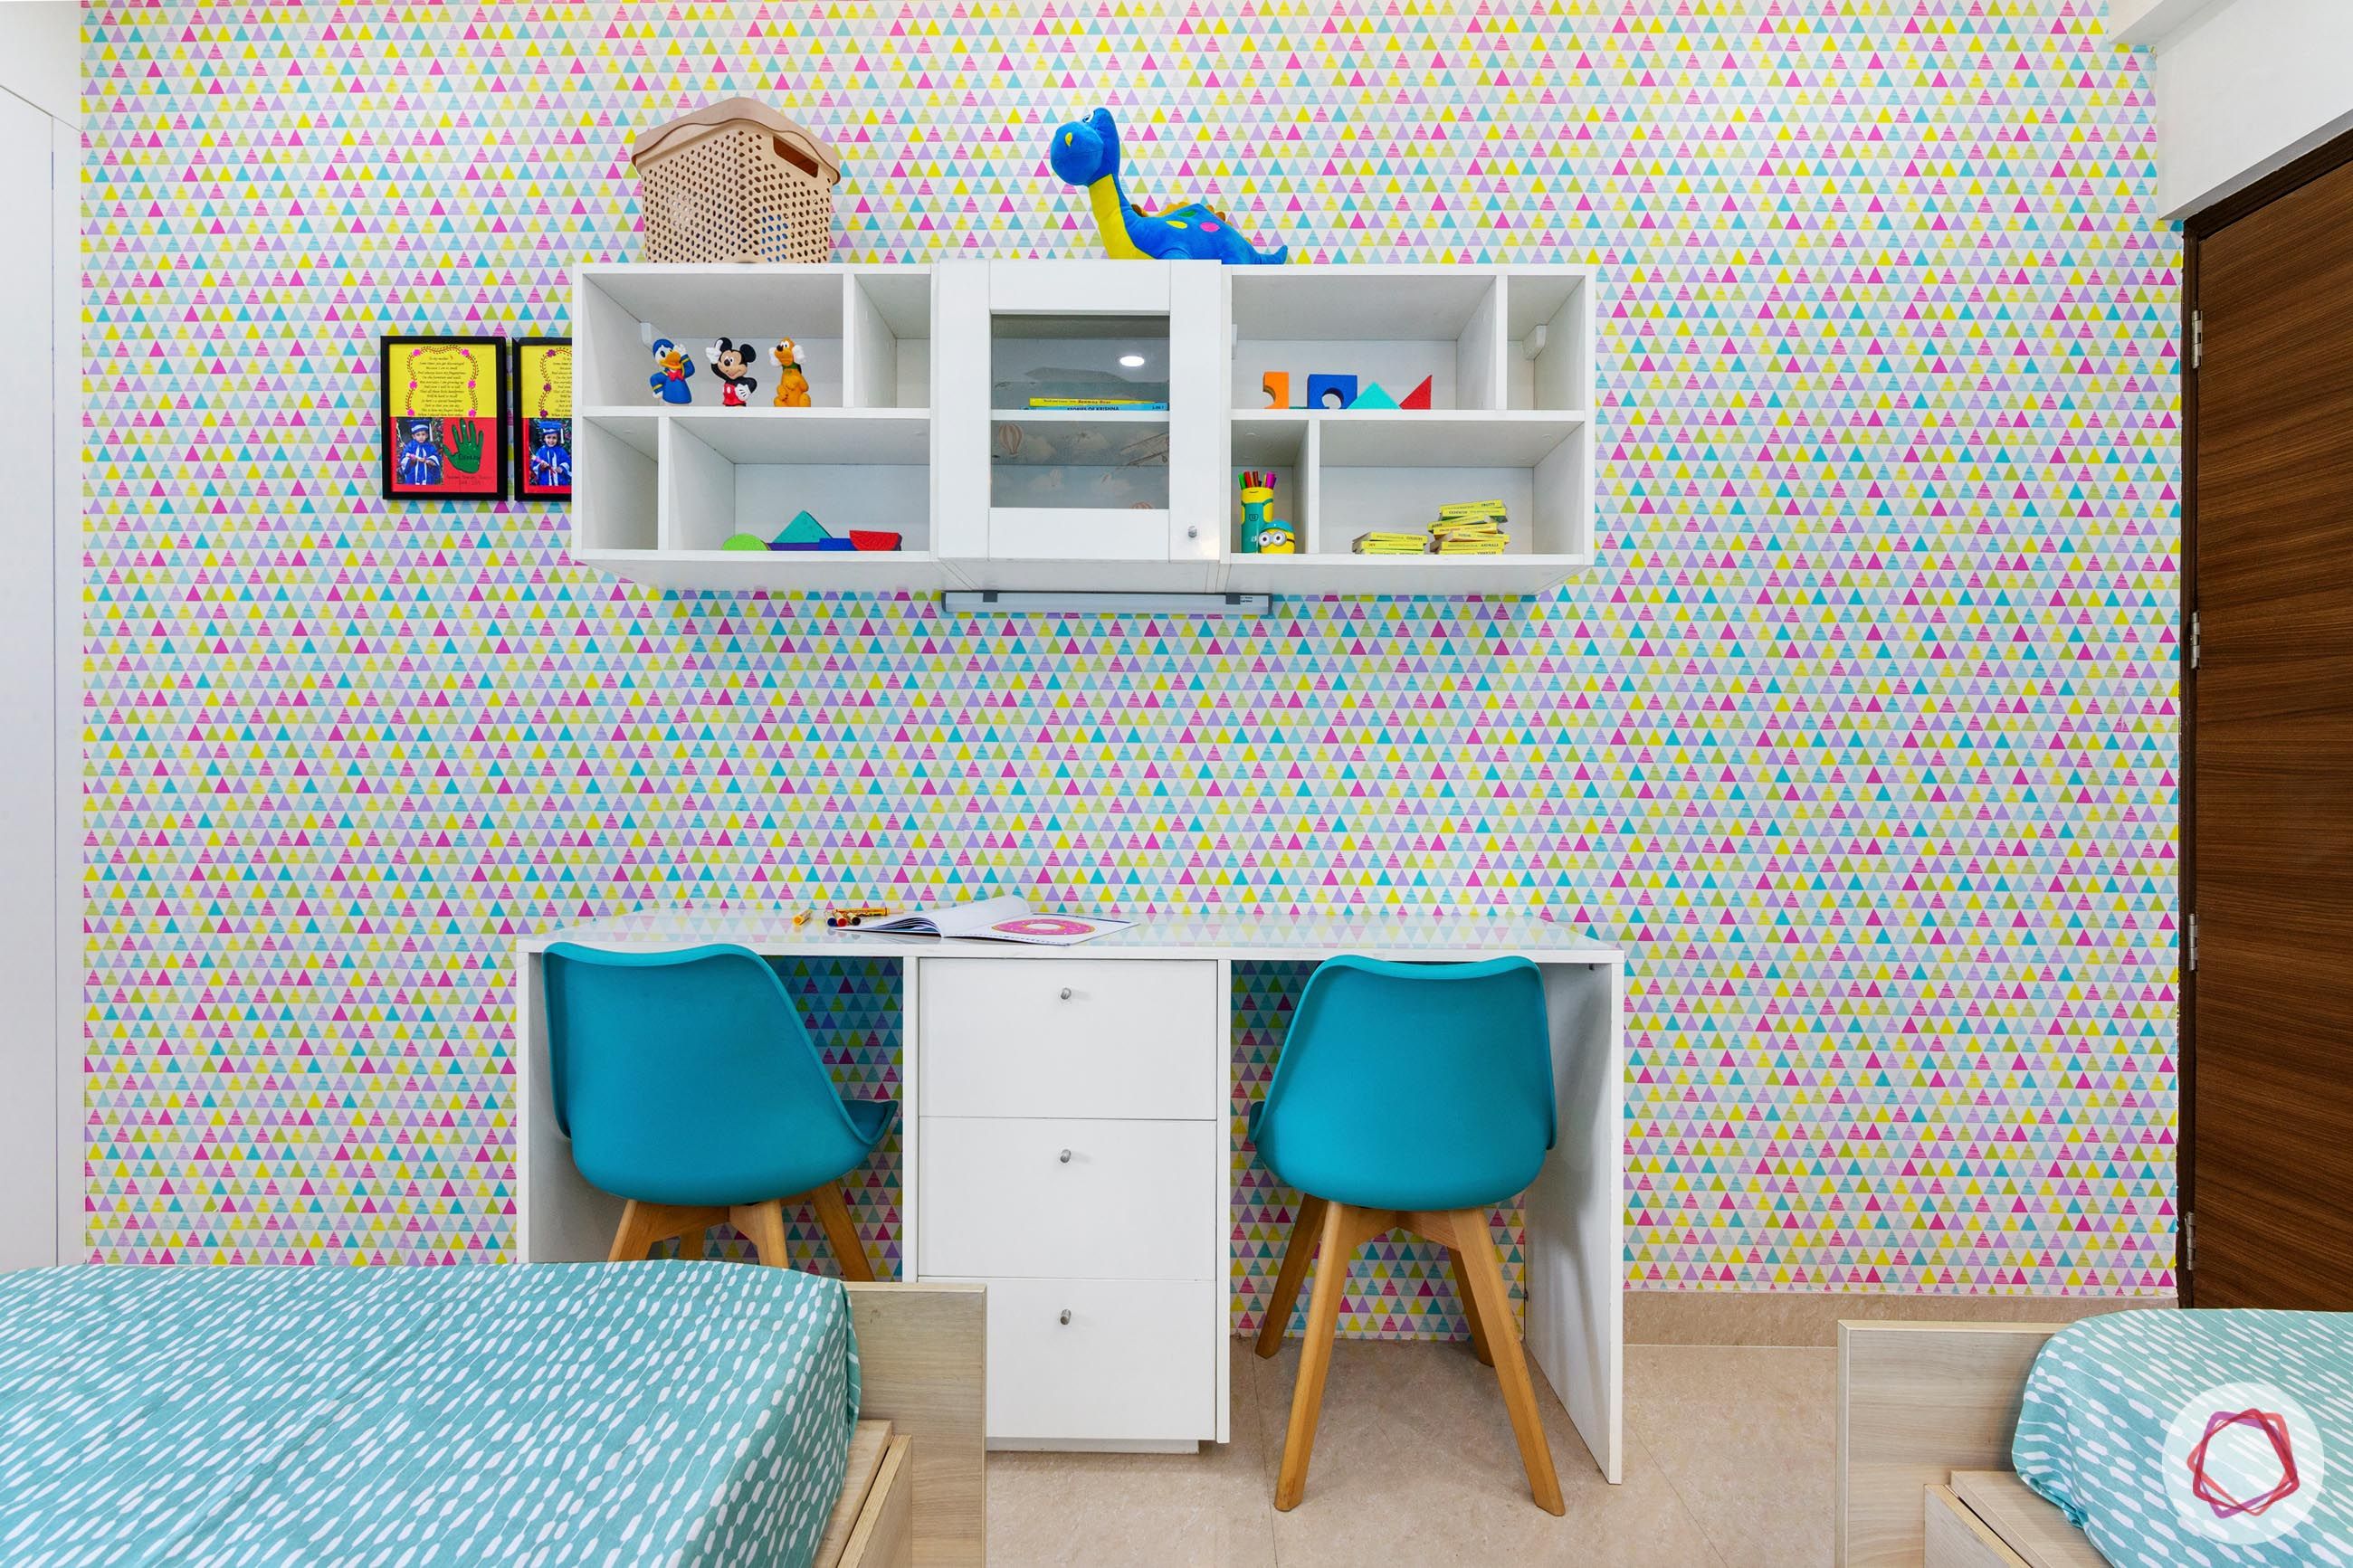 blue study chairs-kids room wallpaper ideas